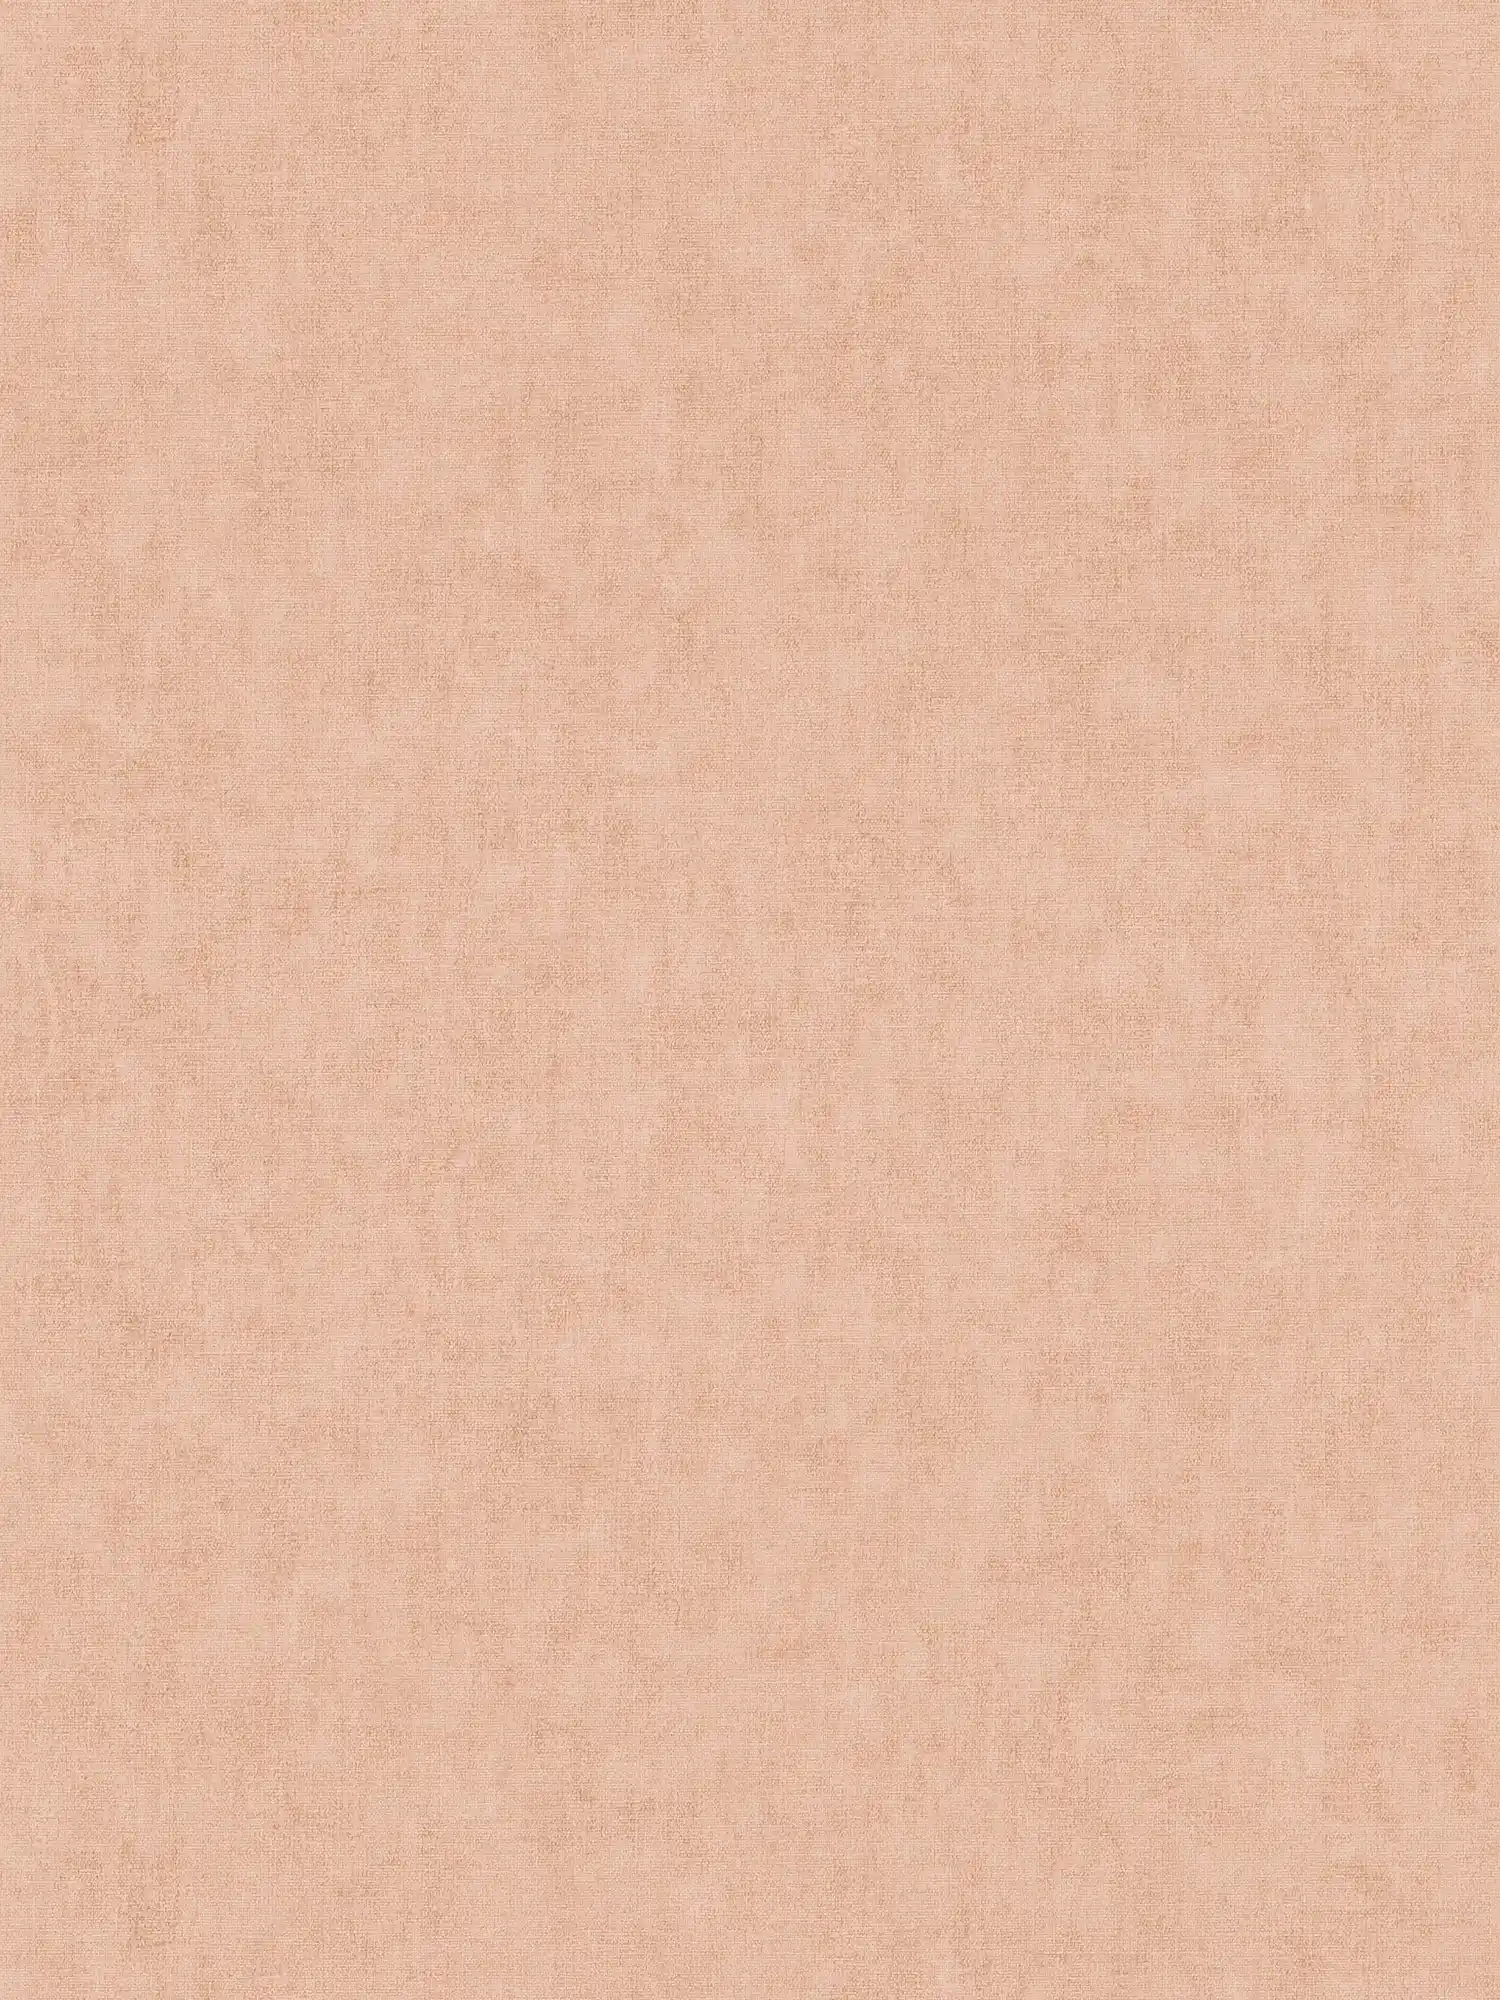 Papier peint uni, aspect lin & style scandinave - rose, orange
